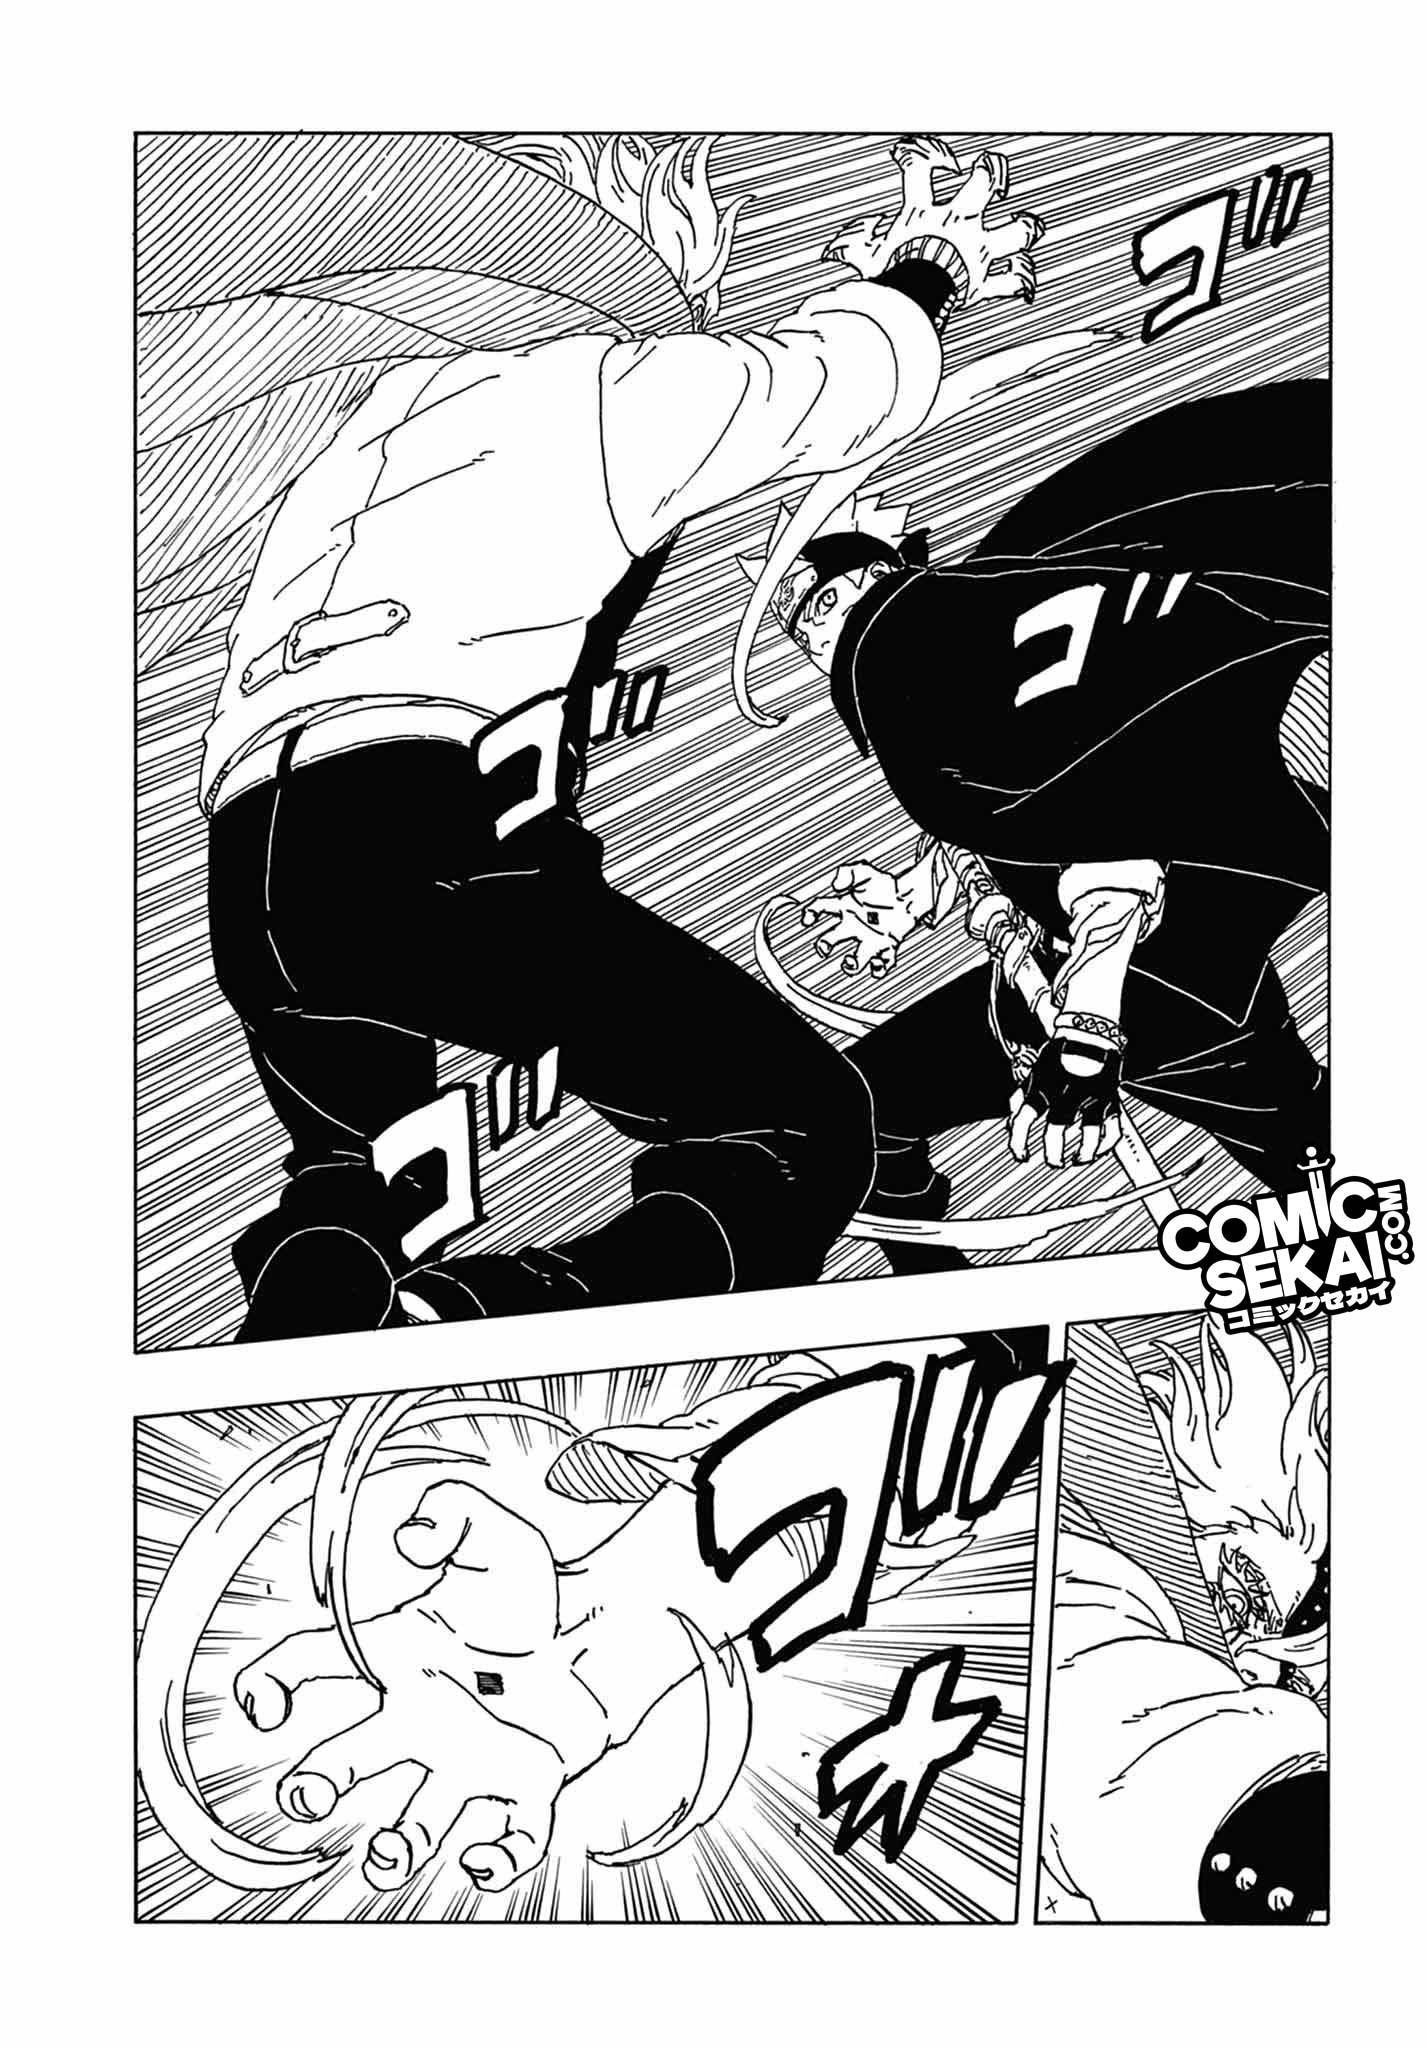 Boruto Two Blue Vortex chapter 3 - Boruto Manga Online